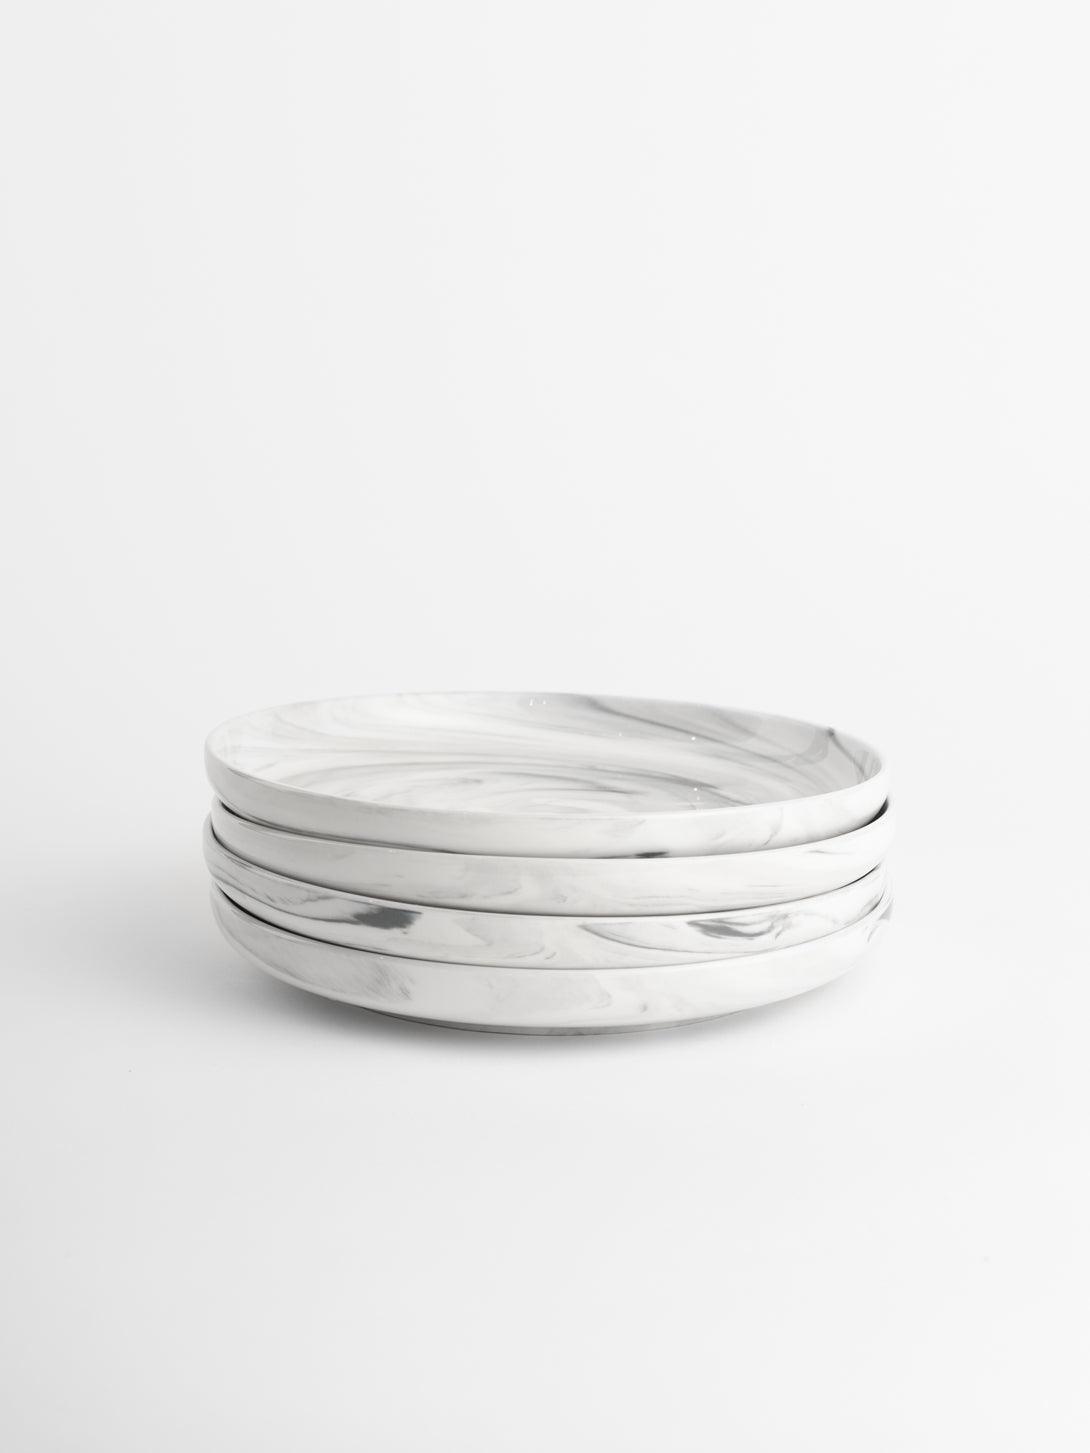 Marble Ceramic Tableware